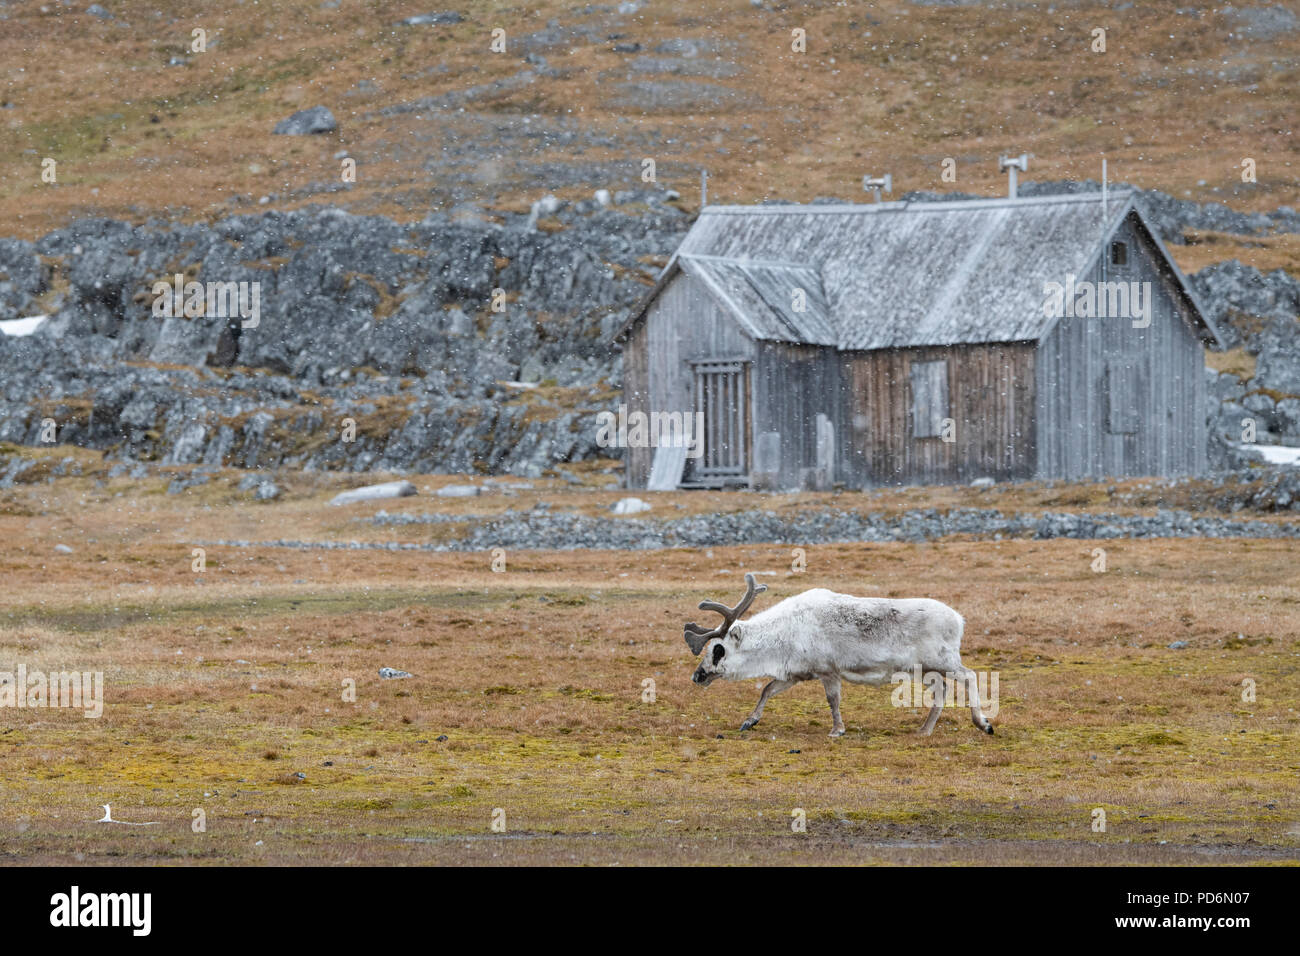 La Norvège, Svalbard, Spitzberg. Renne du Svalbard (Rangifer tarandus platyrhynchus) dans la neige en face de l'ancienne cabine d'extraction. Banque D'Images